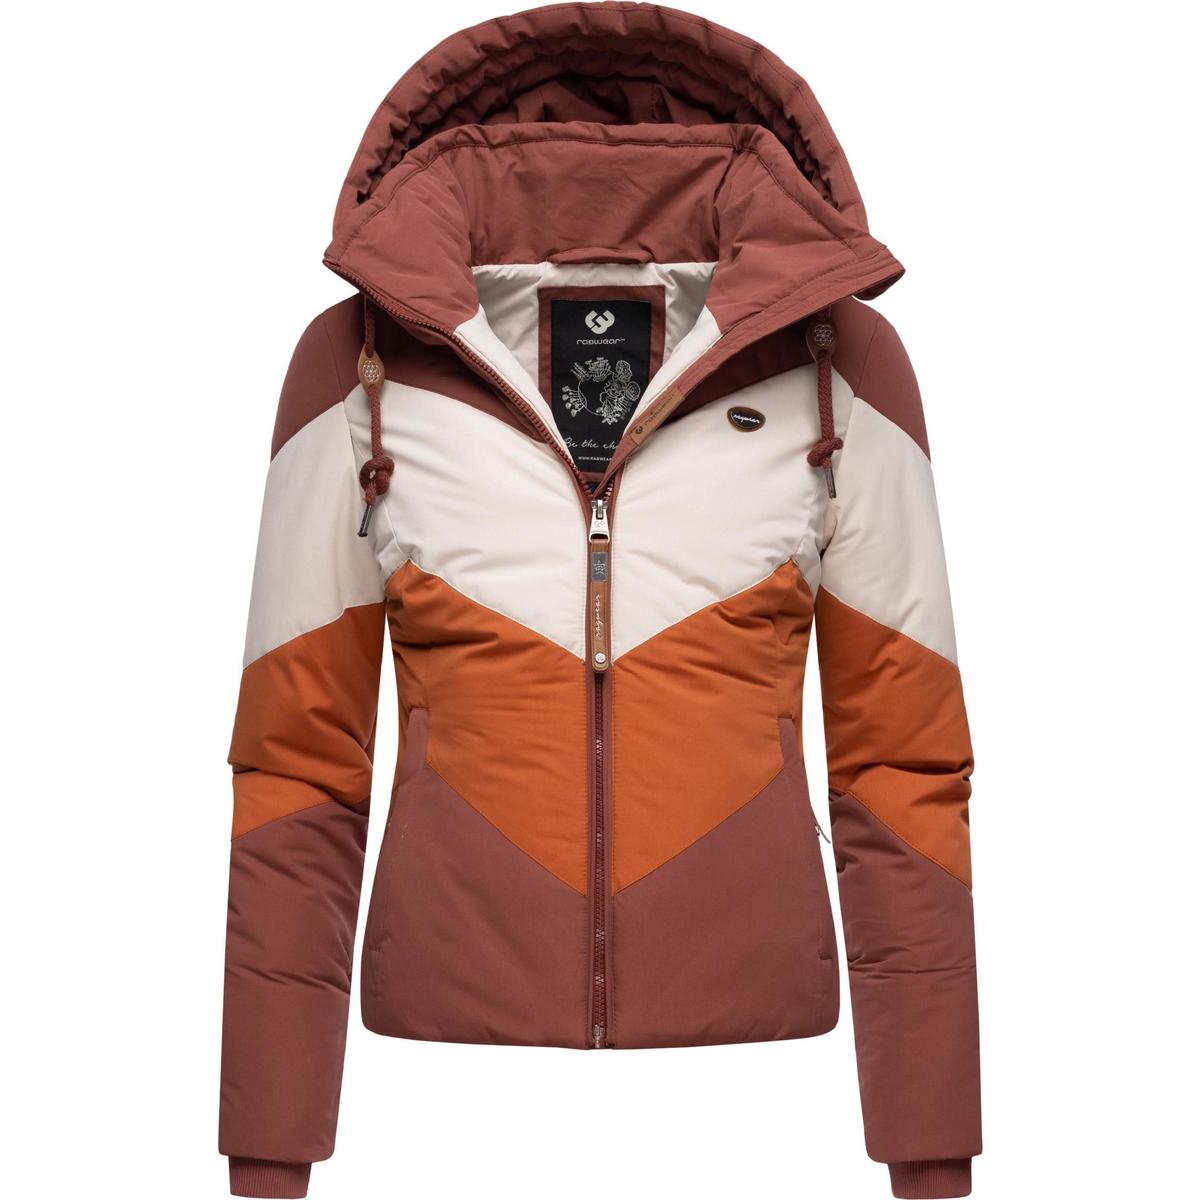 Ragwear Winterjacke Novva Block Braun - Kleidung Jacken Damen 139,99 €